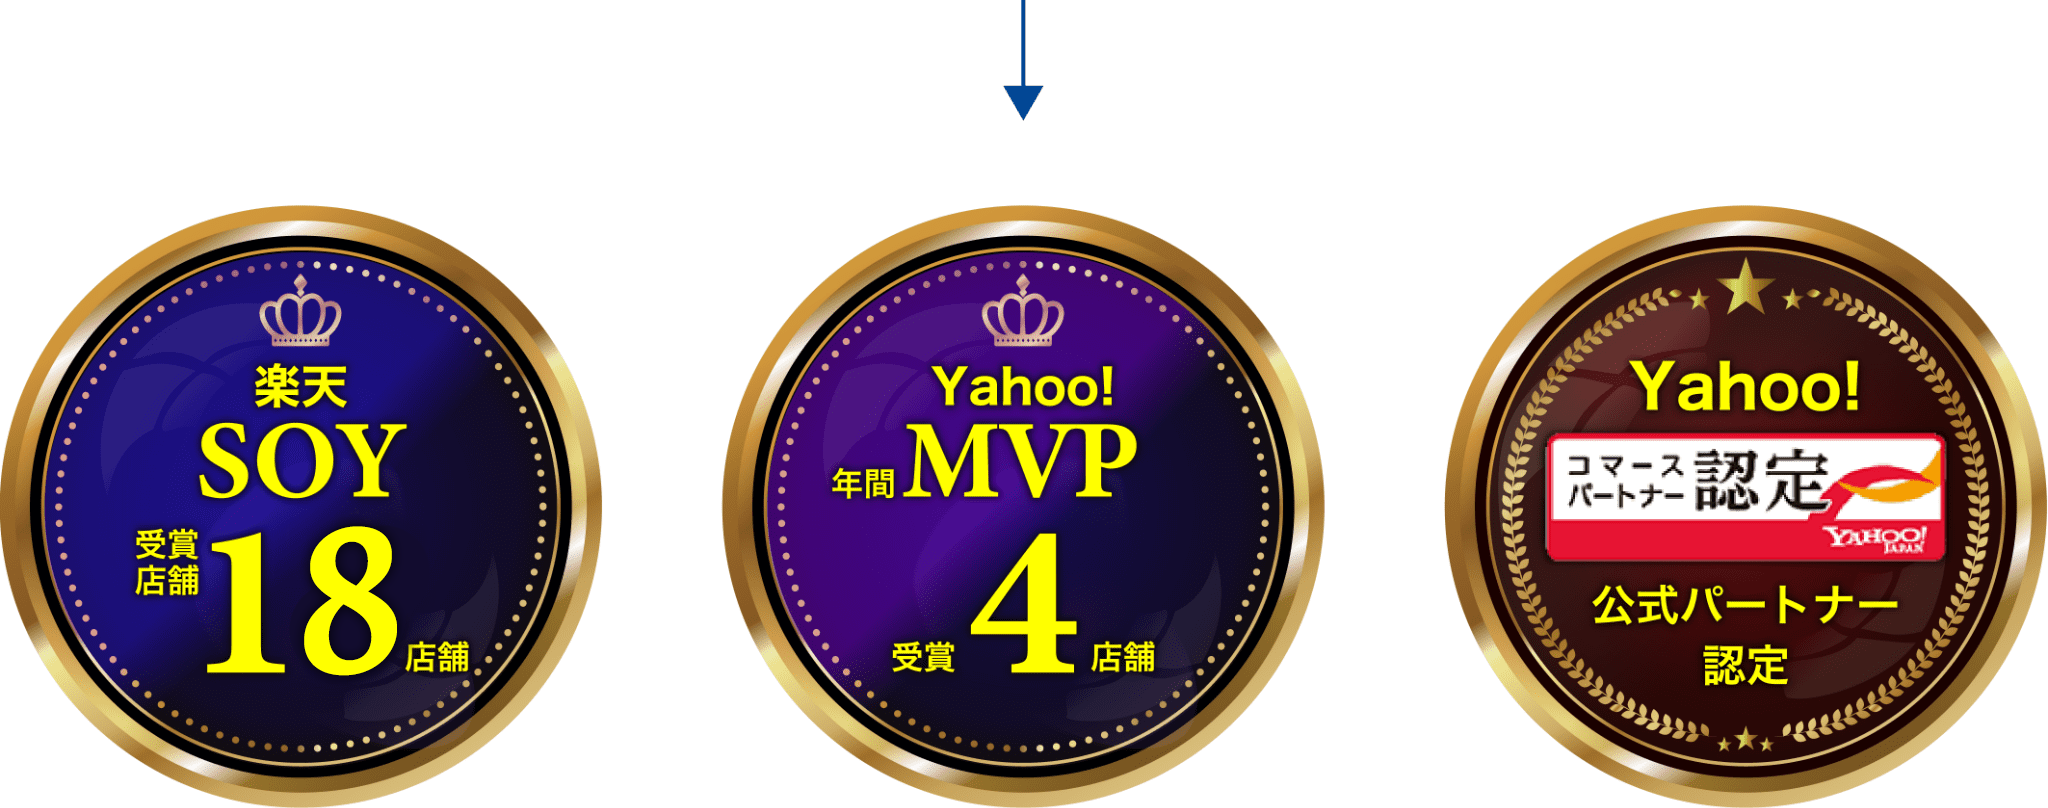 楽天SOY受賞店舗18店舗 Yahoo!年間MVP受賞4店舗 Yahoo!公式パートナー認定